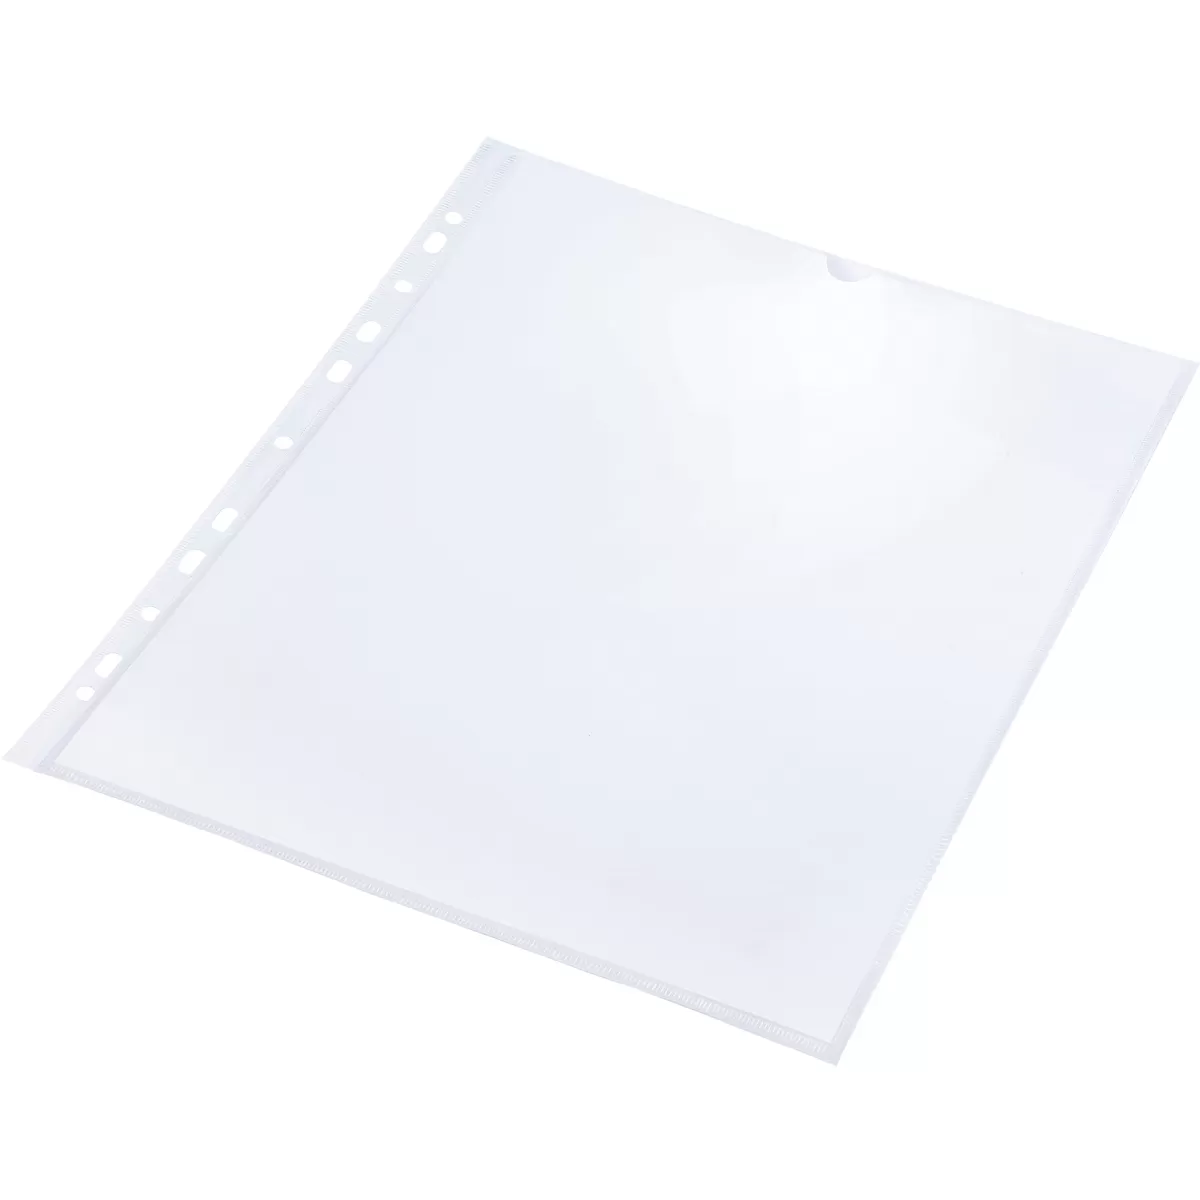 Panta Plast Джоб за документи, L-образен, A4, 200 µm, кристал, 10 броя